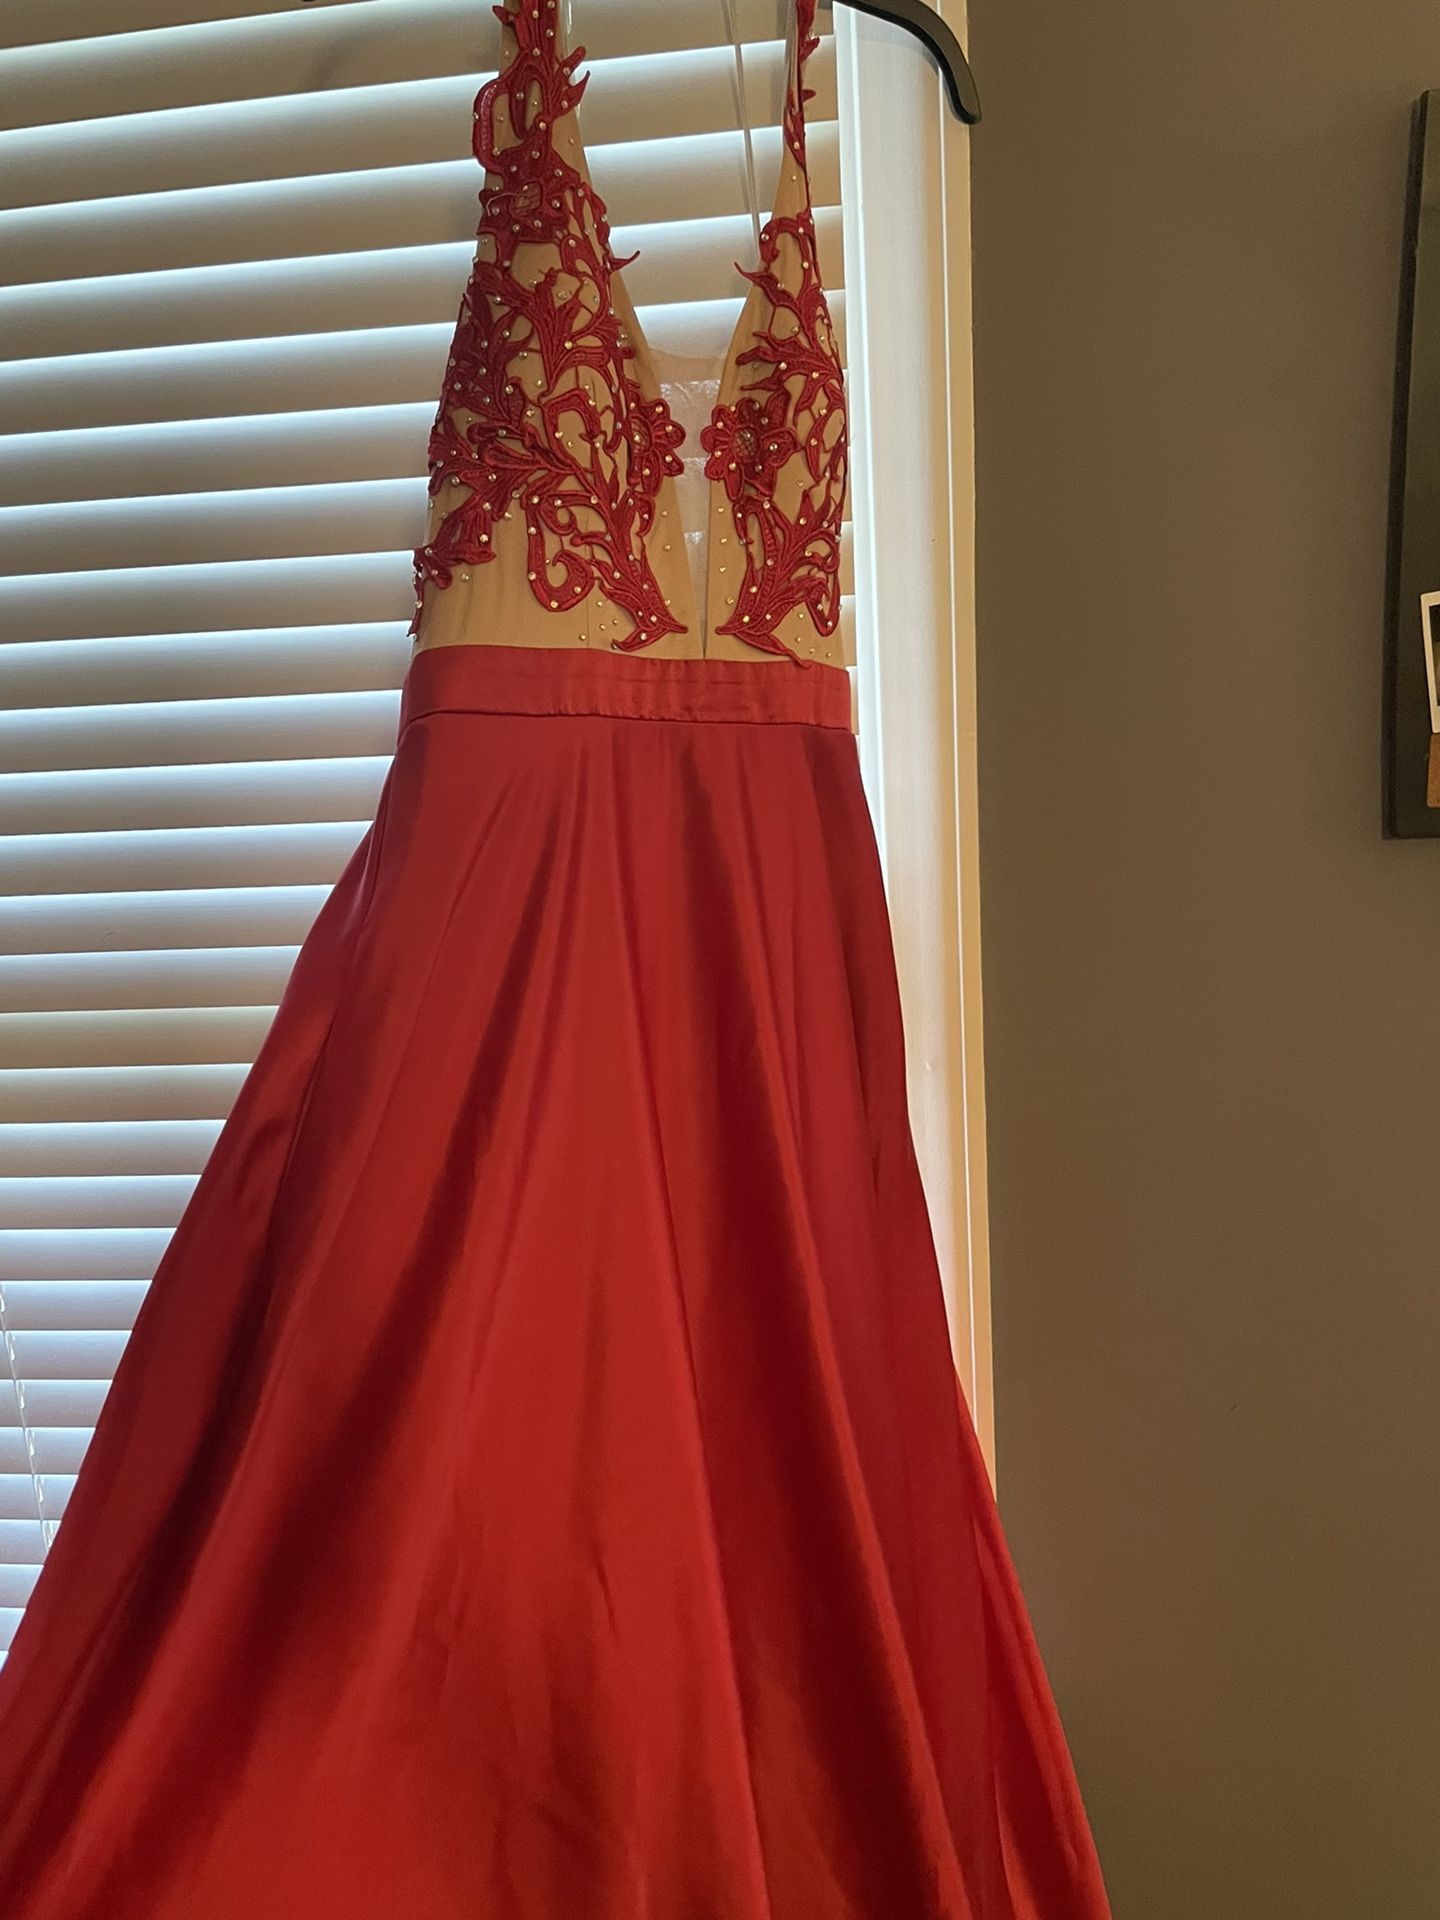 Prom Dress Size 7